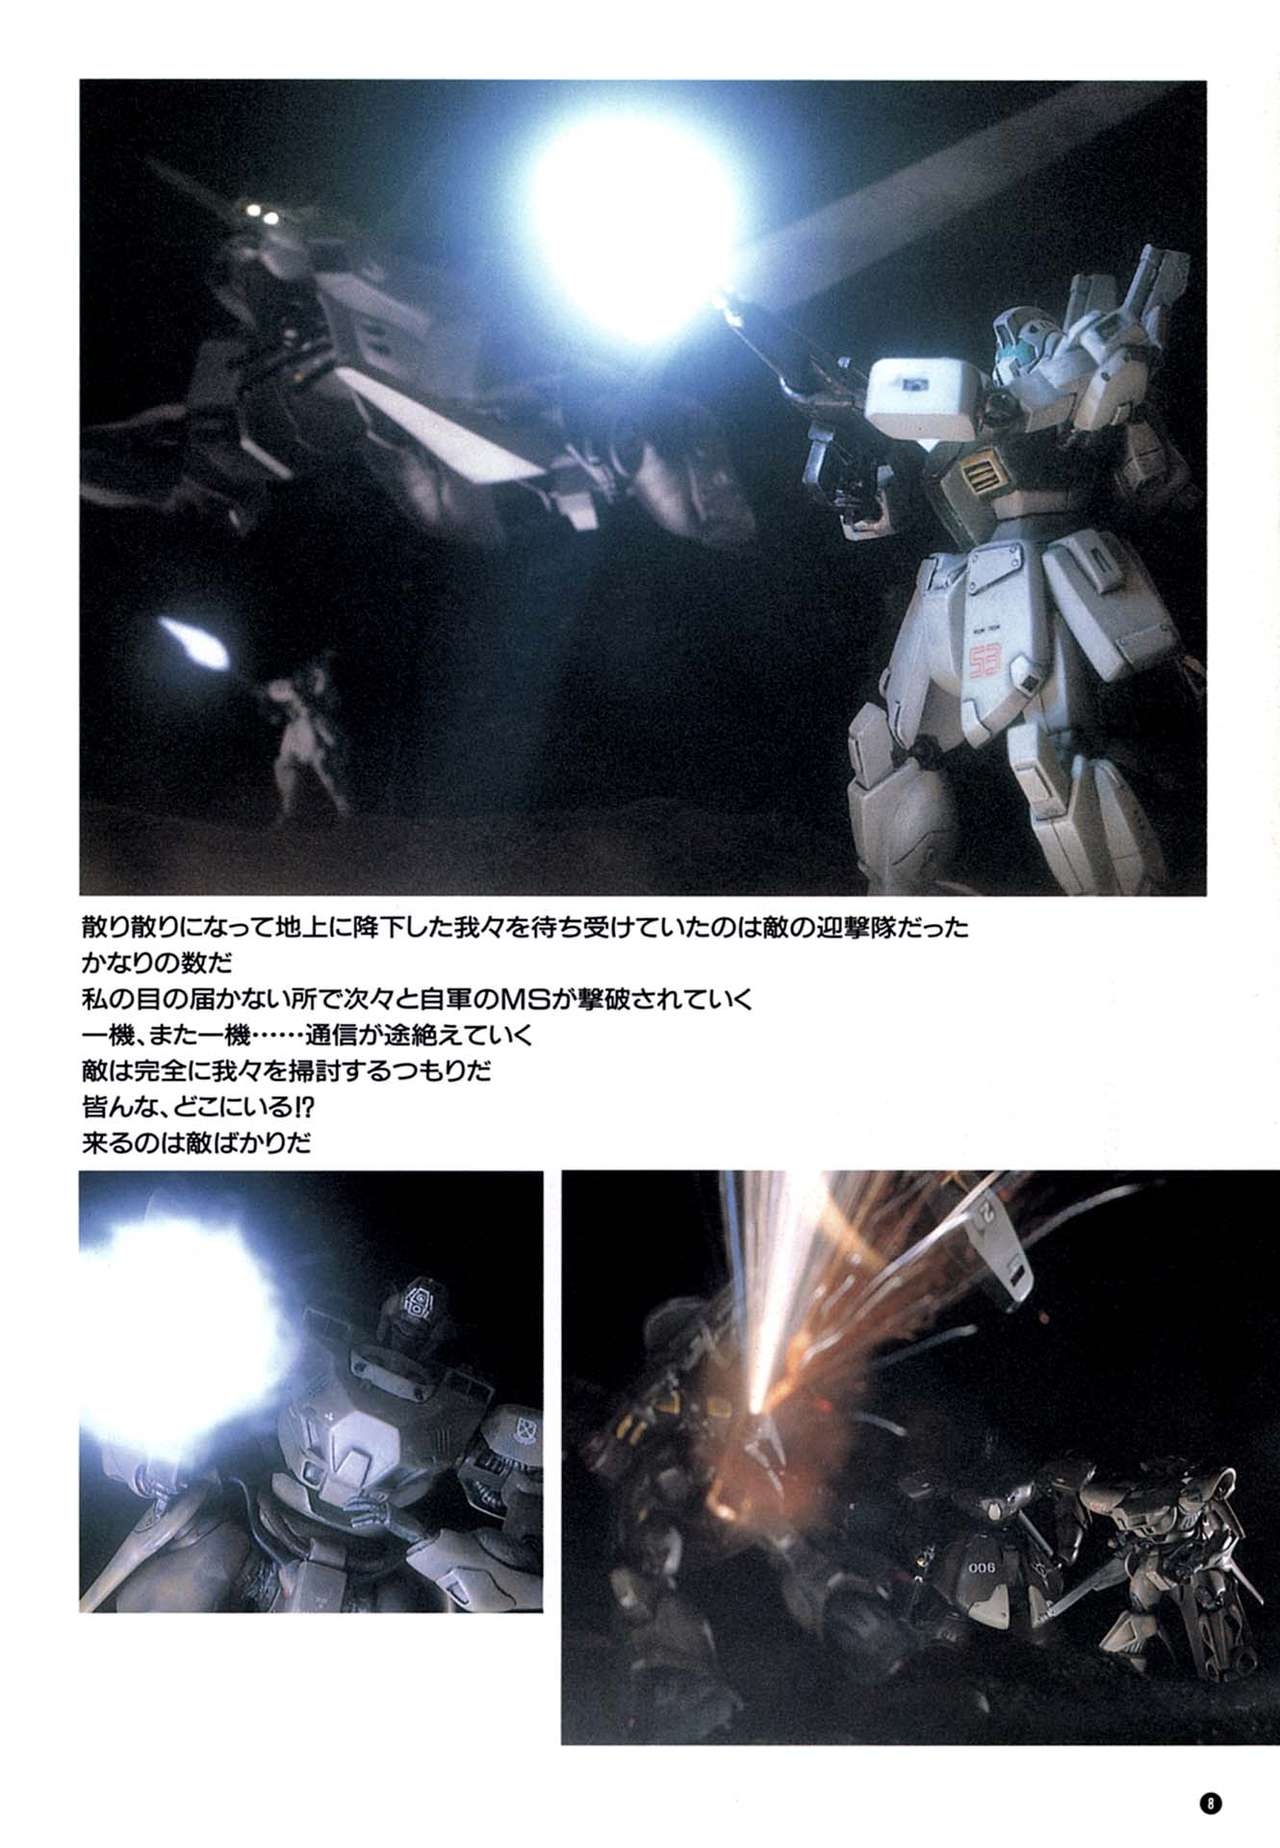 [Kazuhisa Kondo] Kazuhisa Kondo 2D & 3D Works - Go Ahead - From Mobile Suit Gundam to Original Mechanism 7